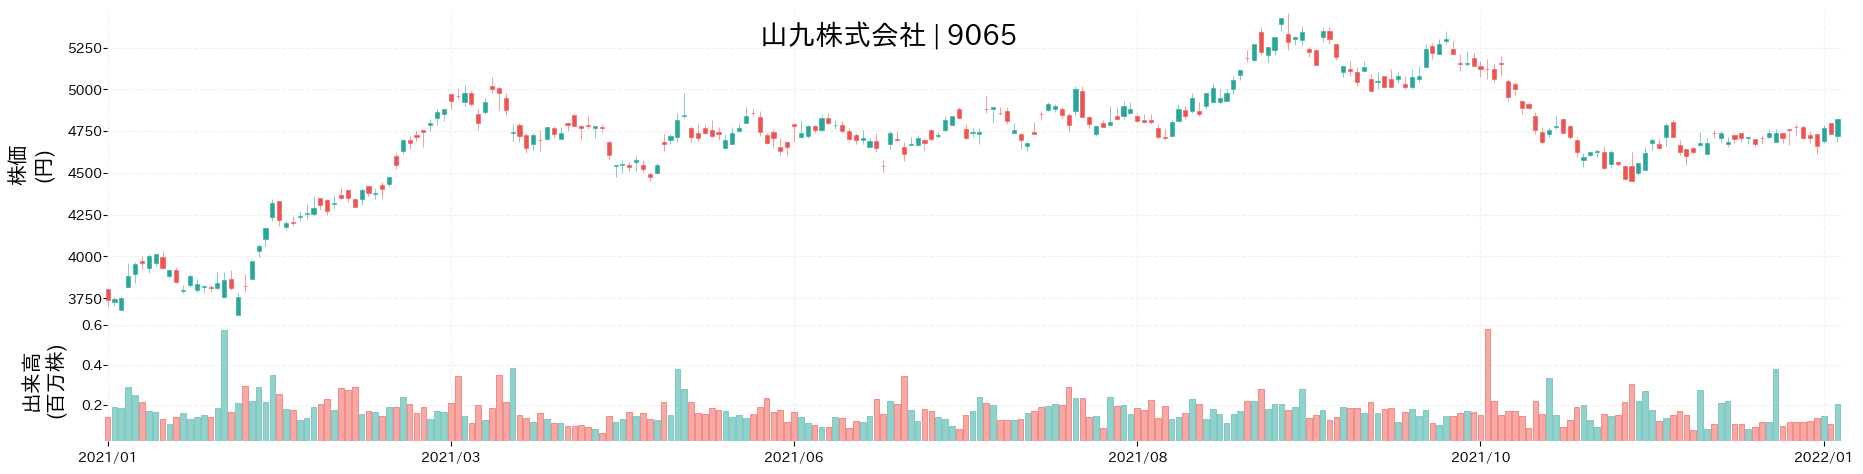 山九の株価推移(2021)